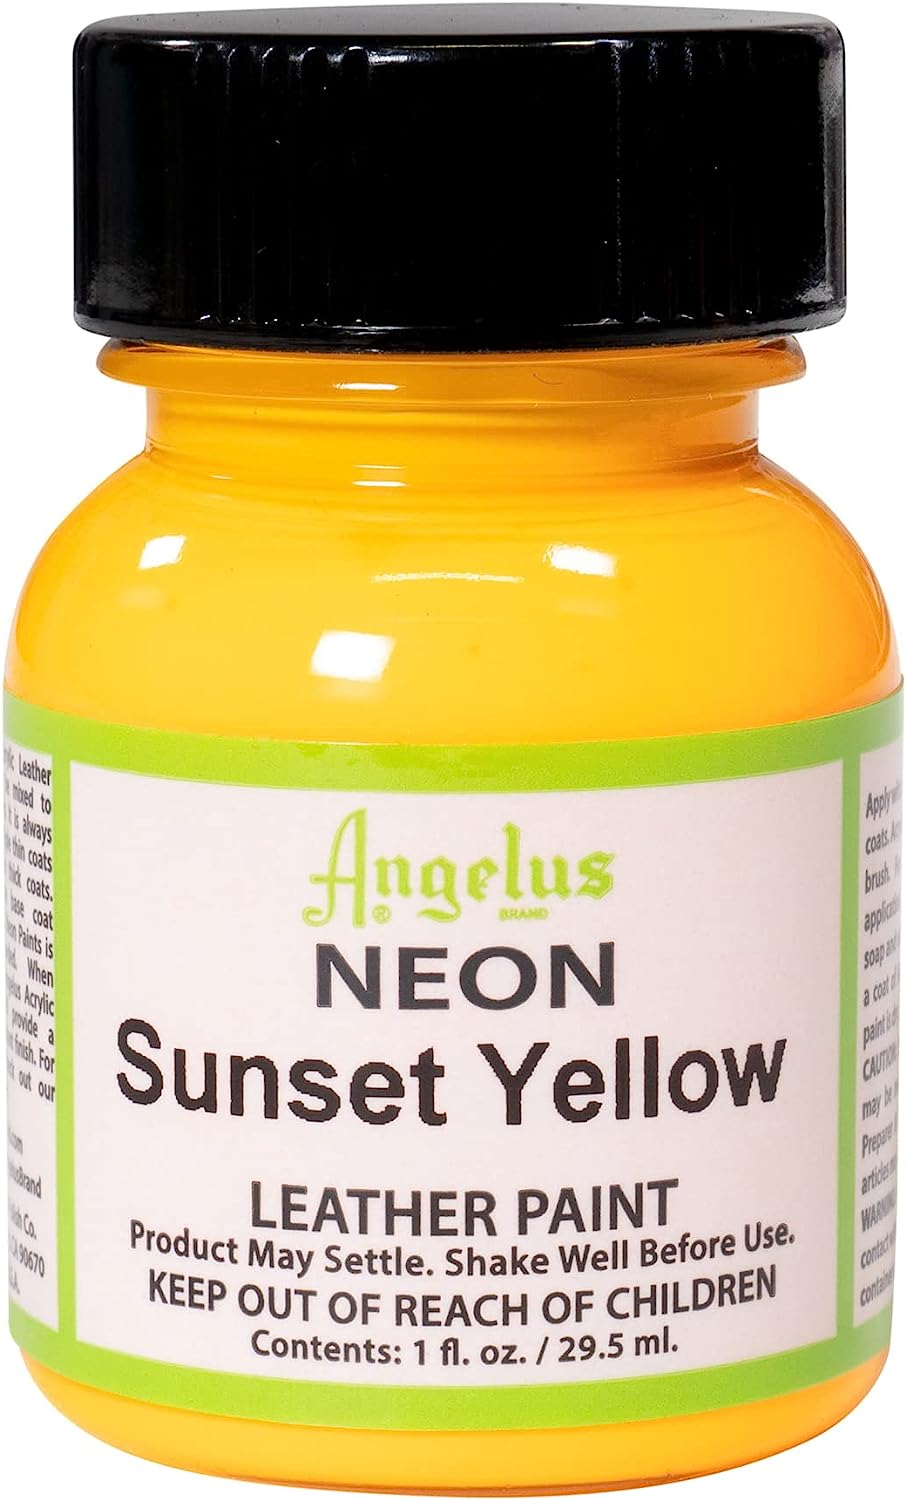 Angelus Neon Leather Paint Sunset Yellow, 1oz